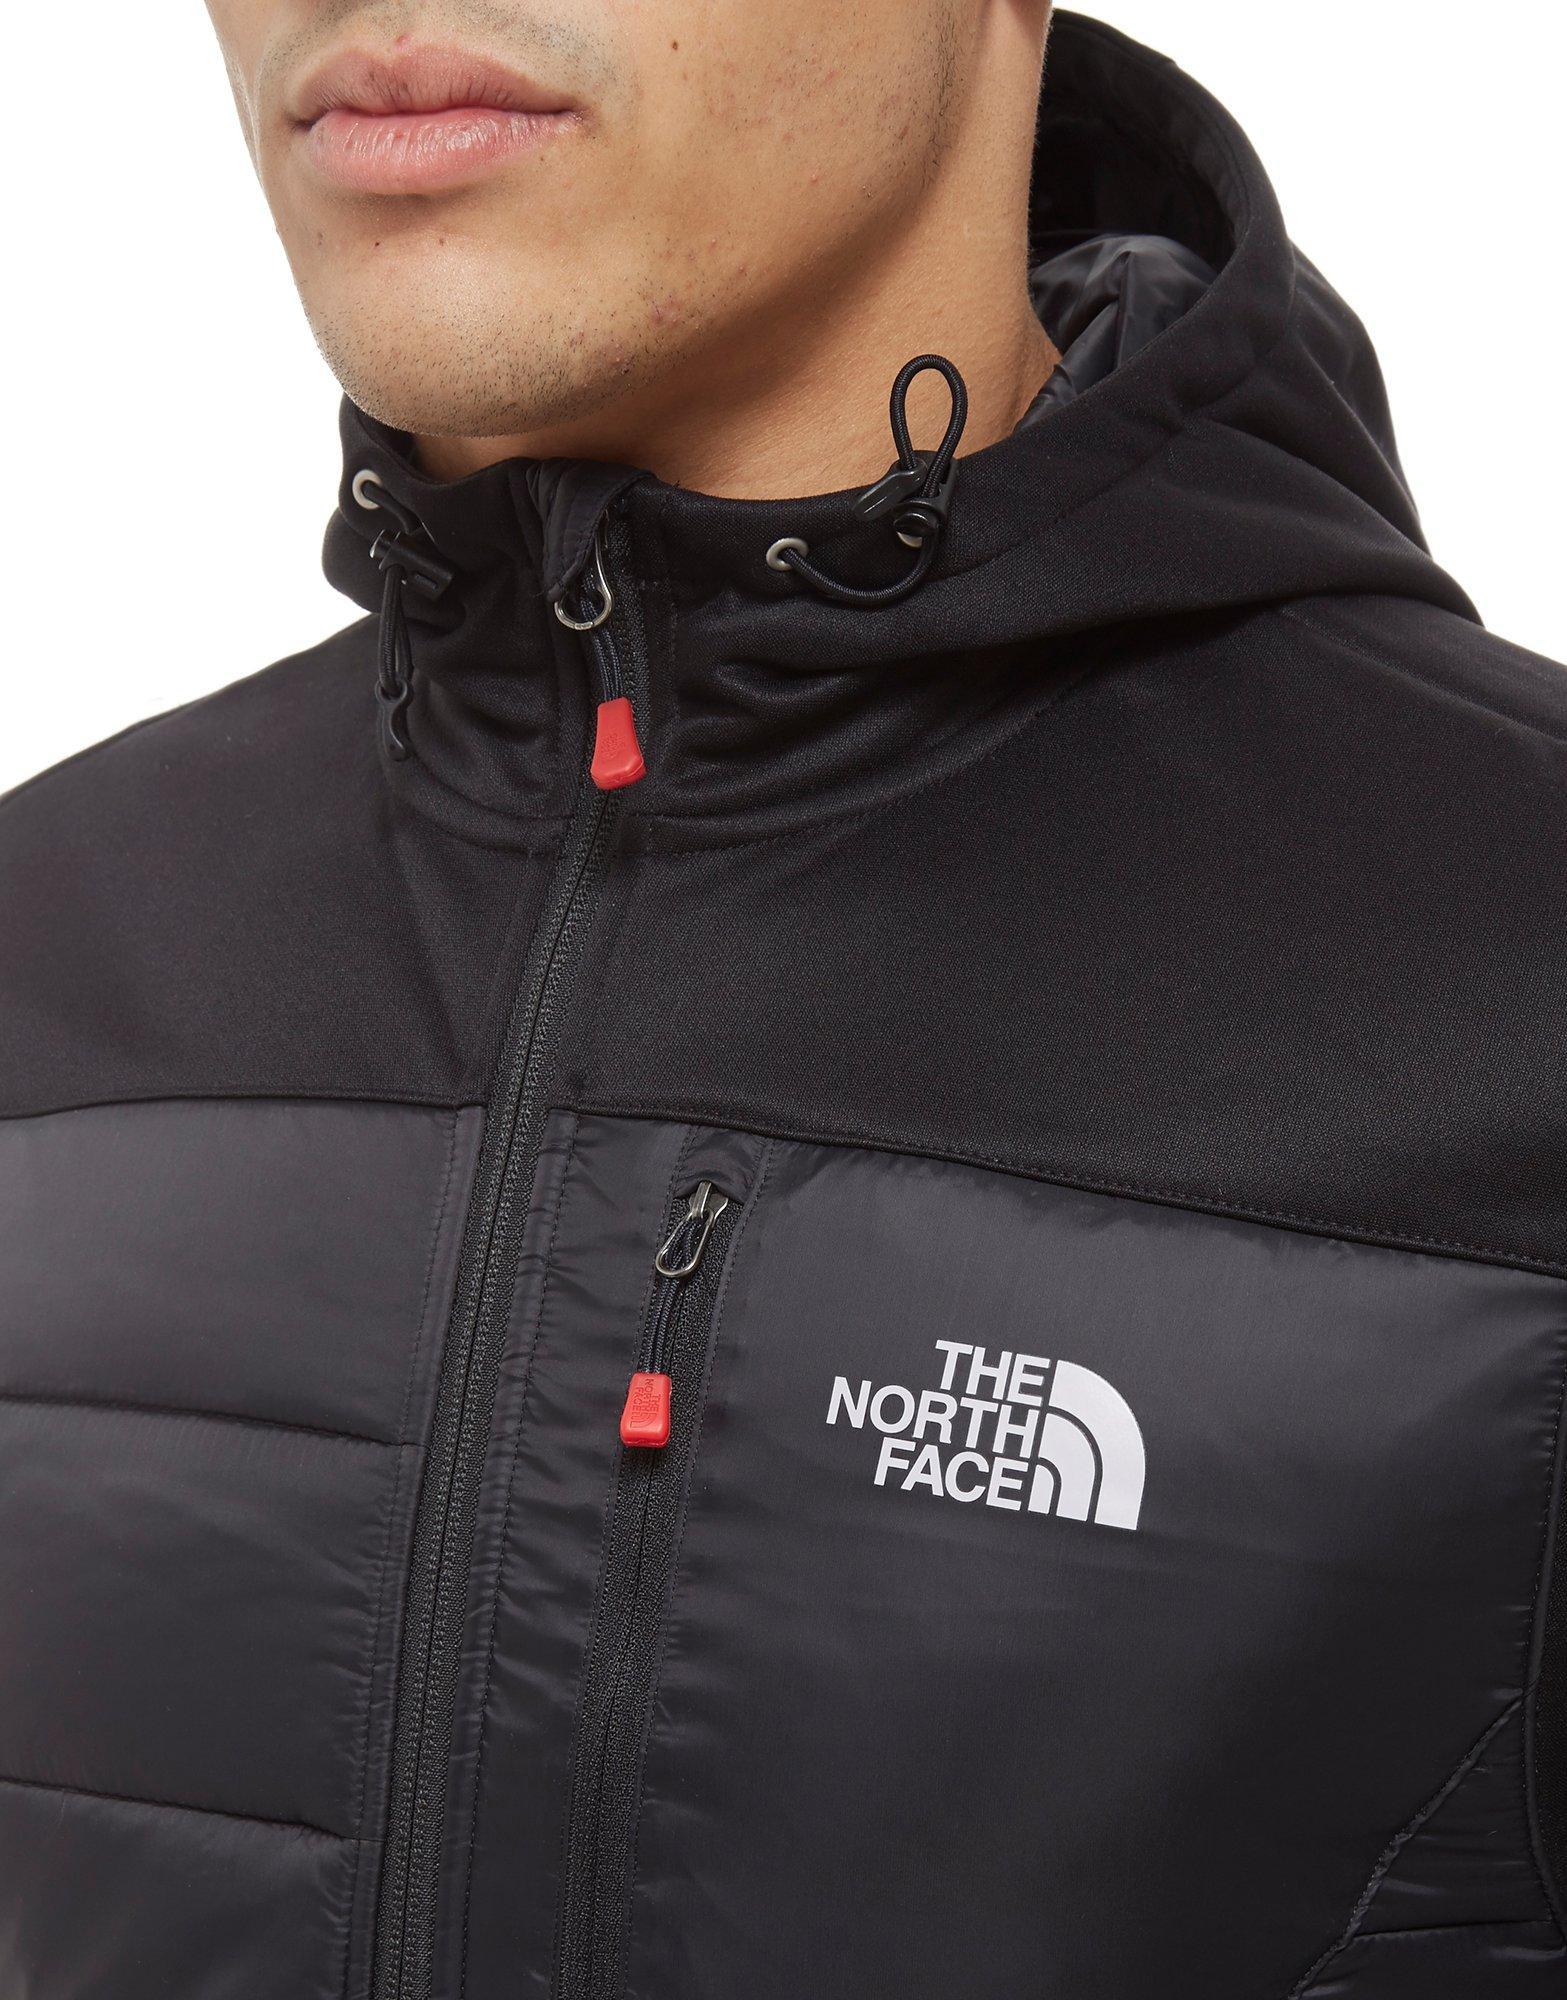 north face hybrid jacket men's